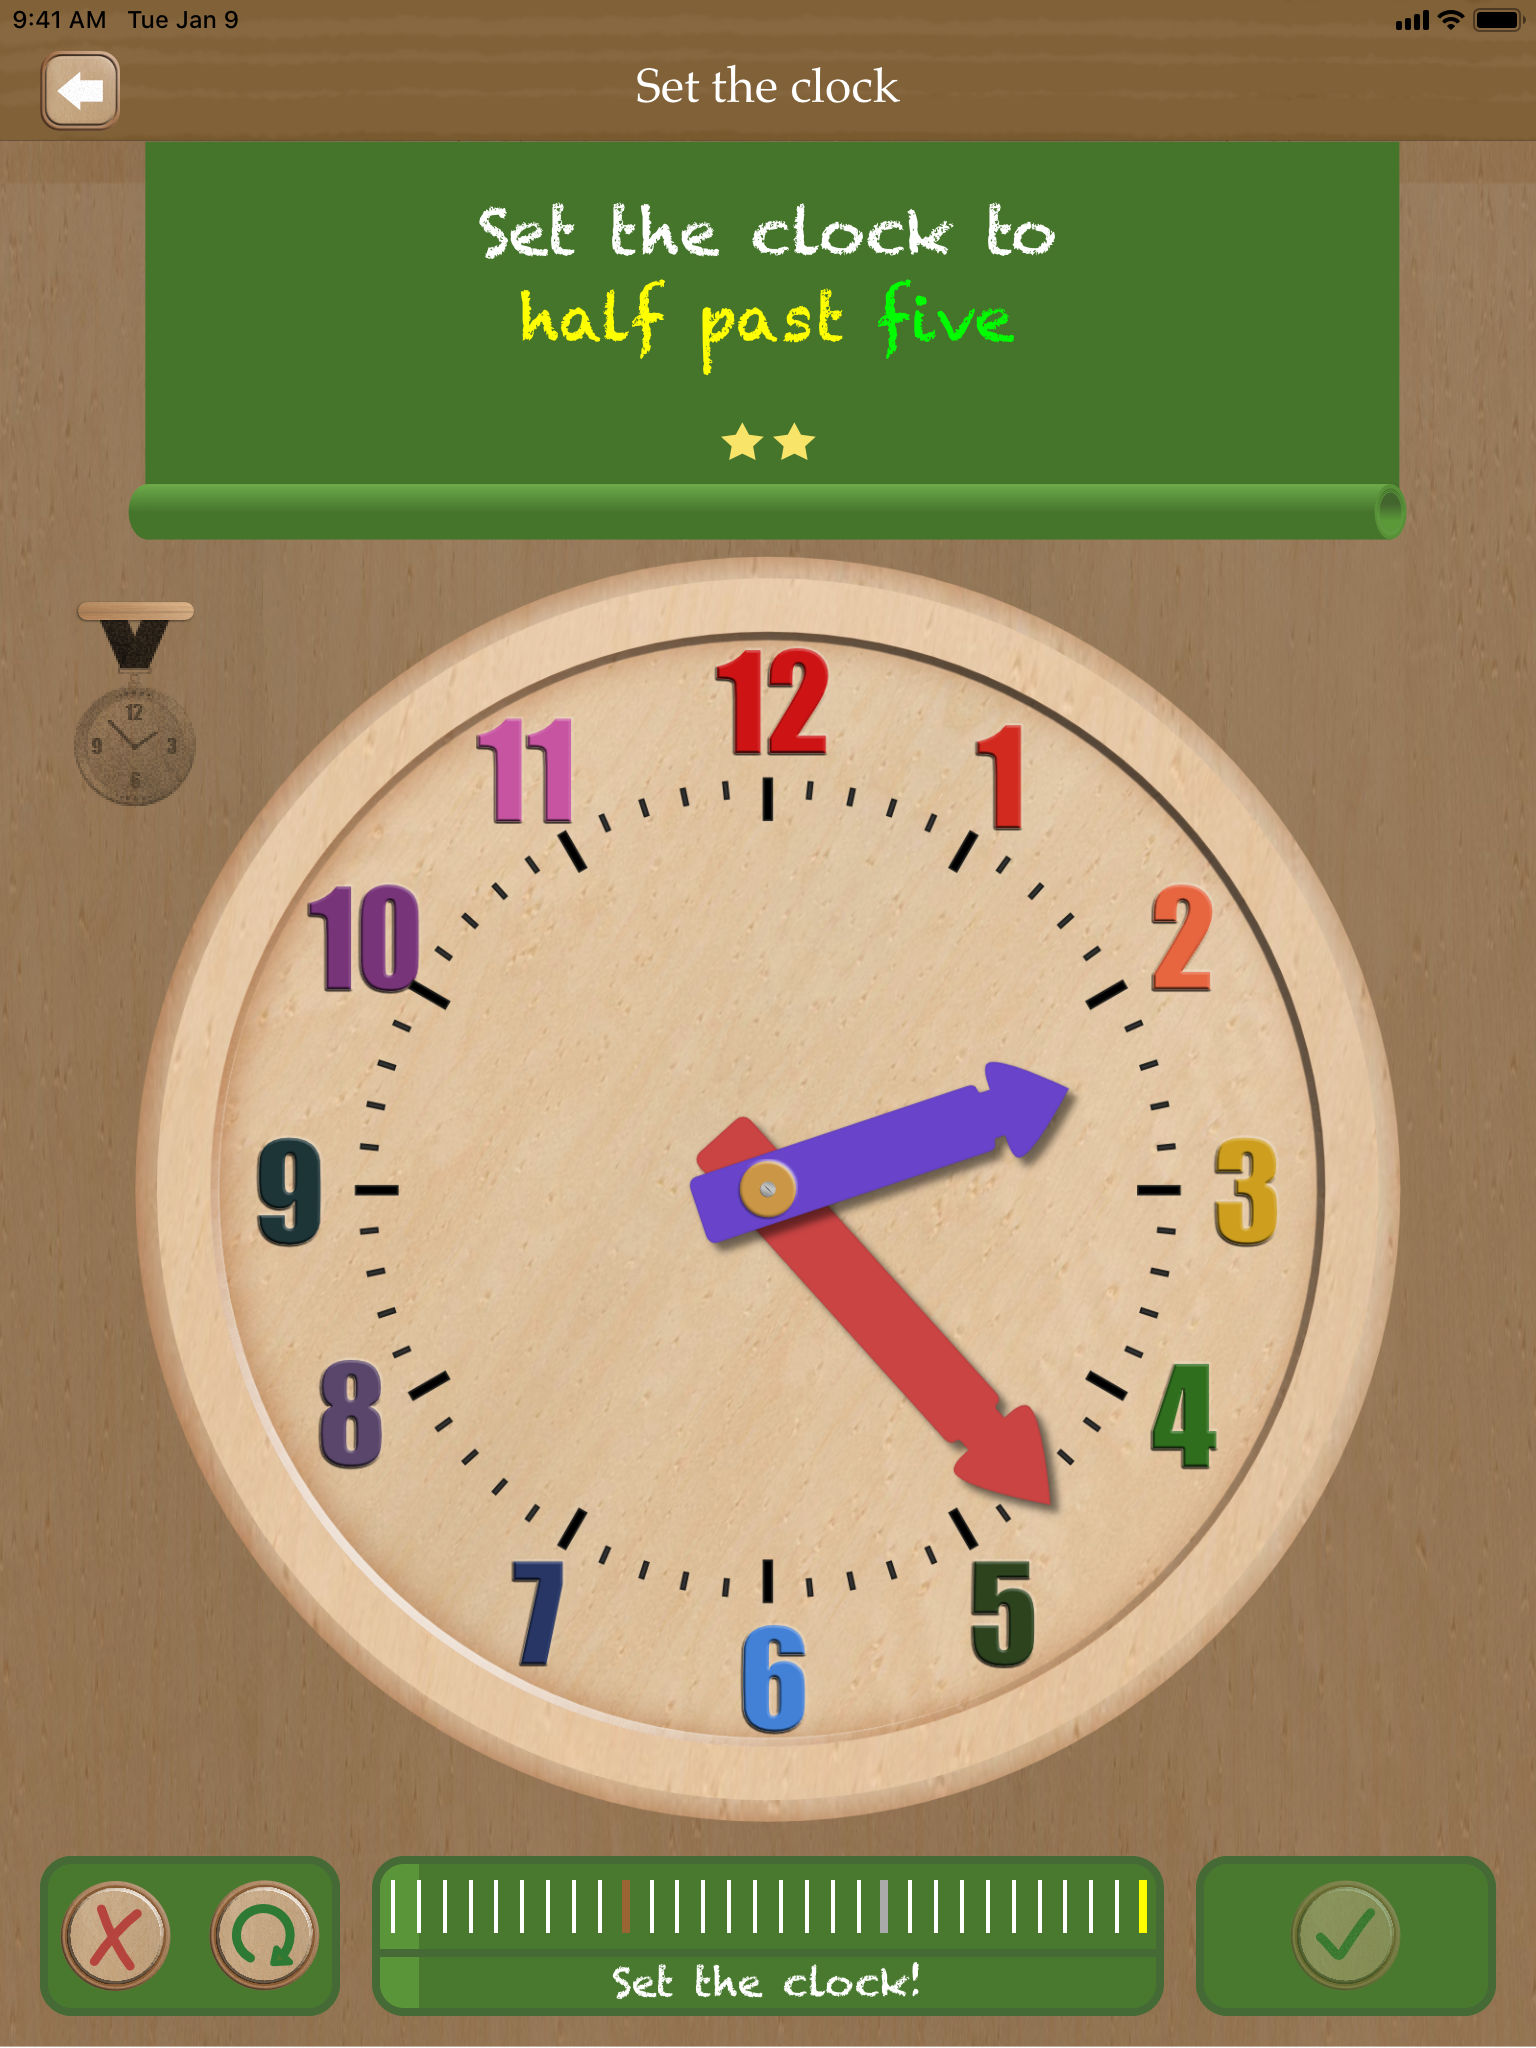 Thumbnail: Set the clock - telling time on iPad App - game type 'Set the clock'